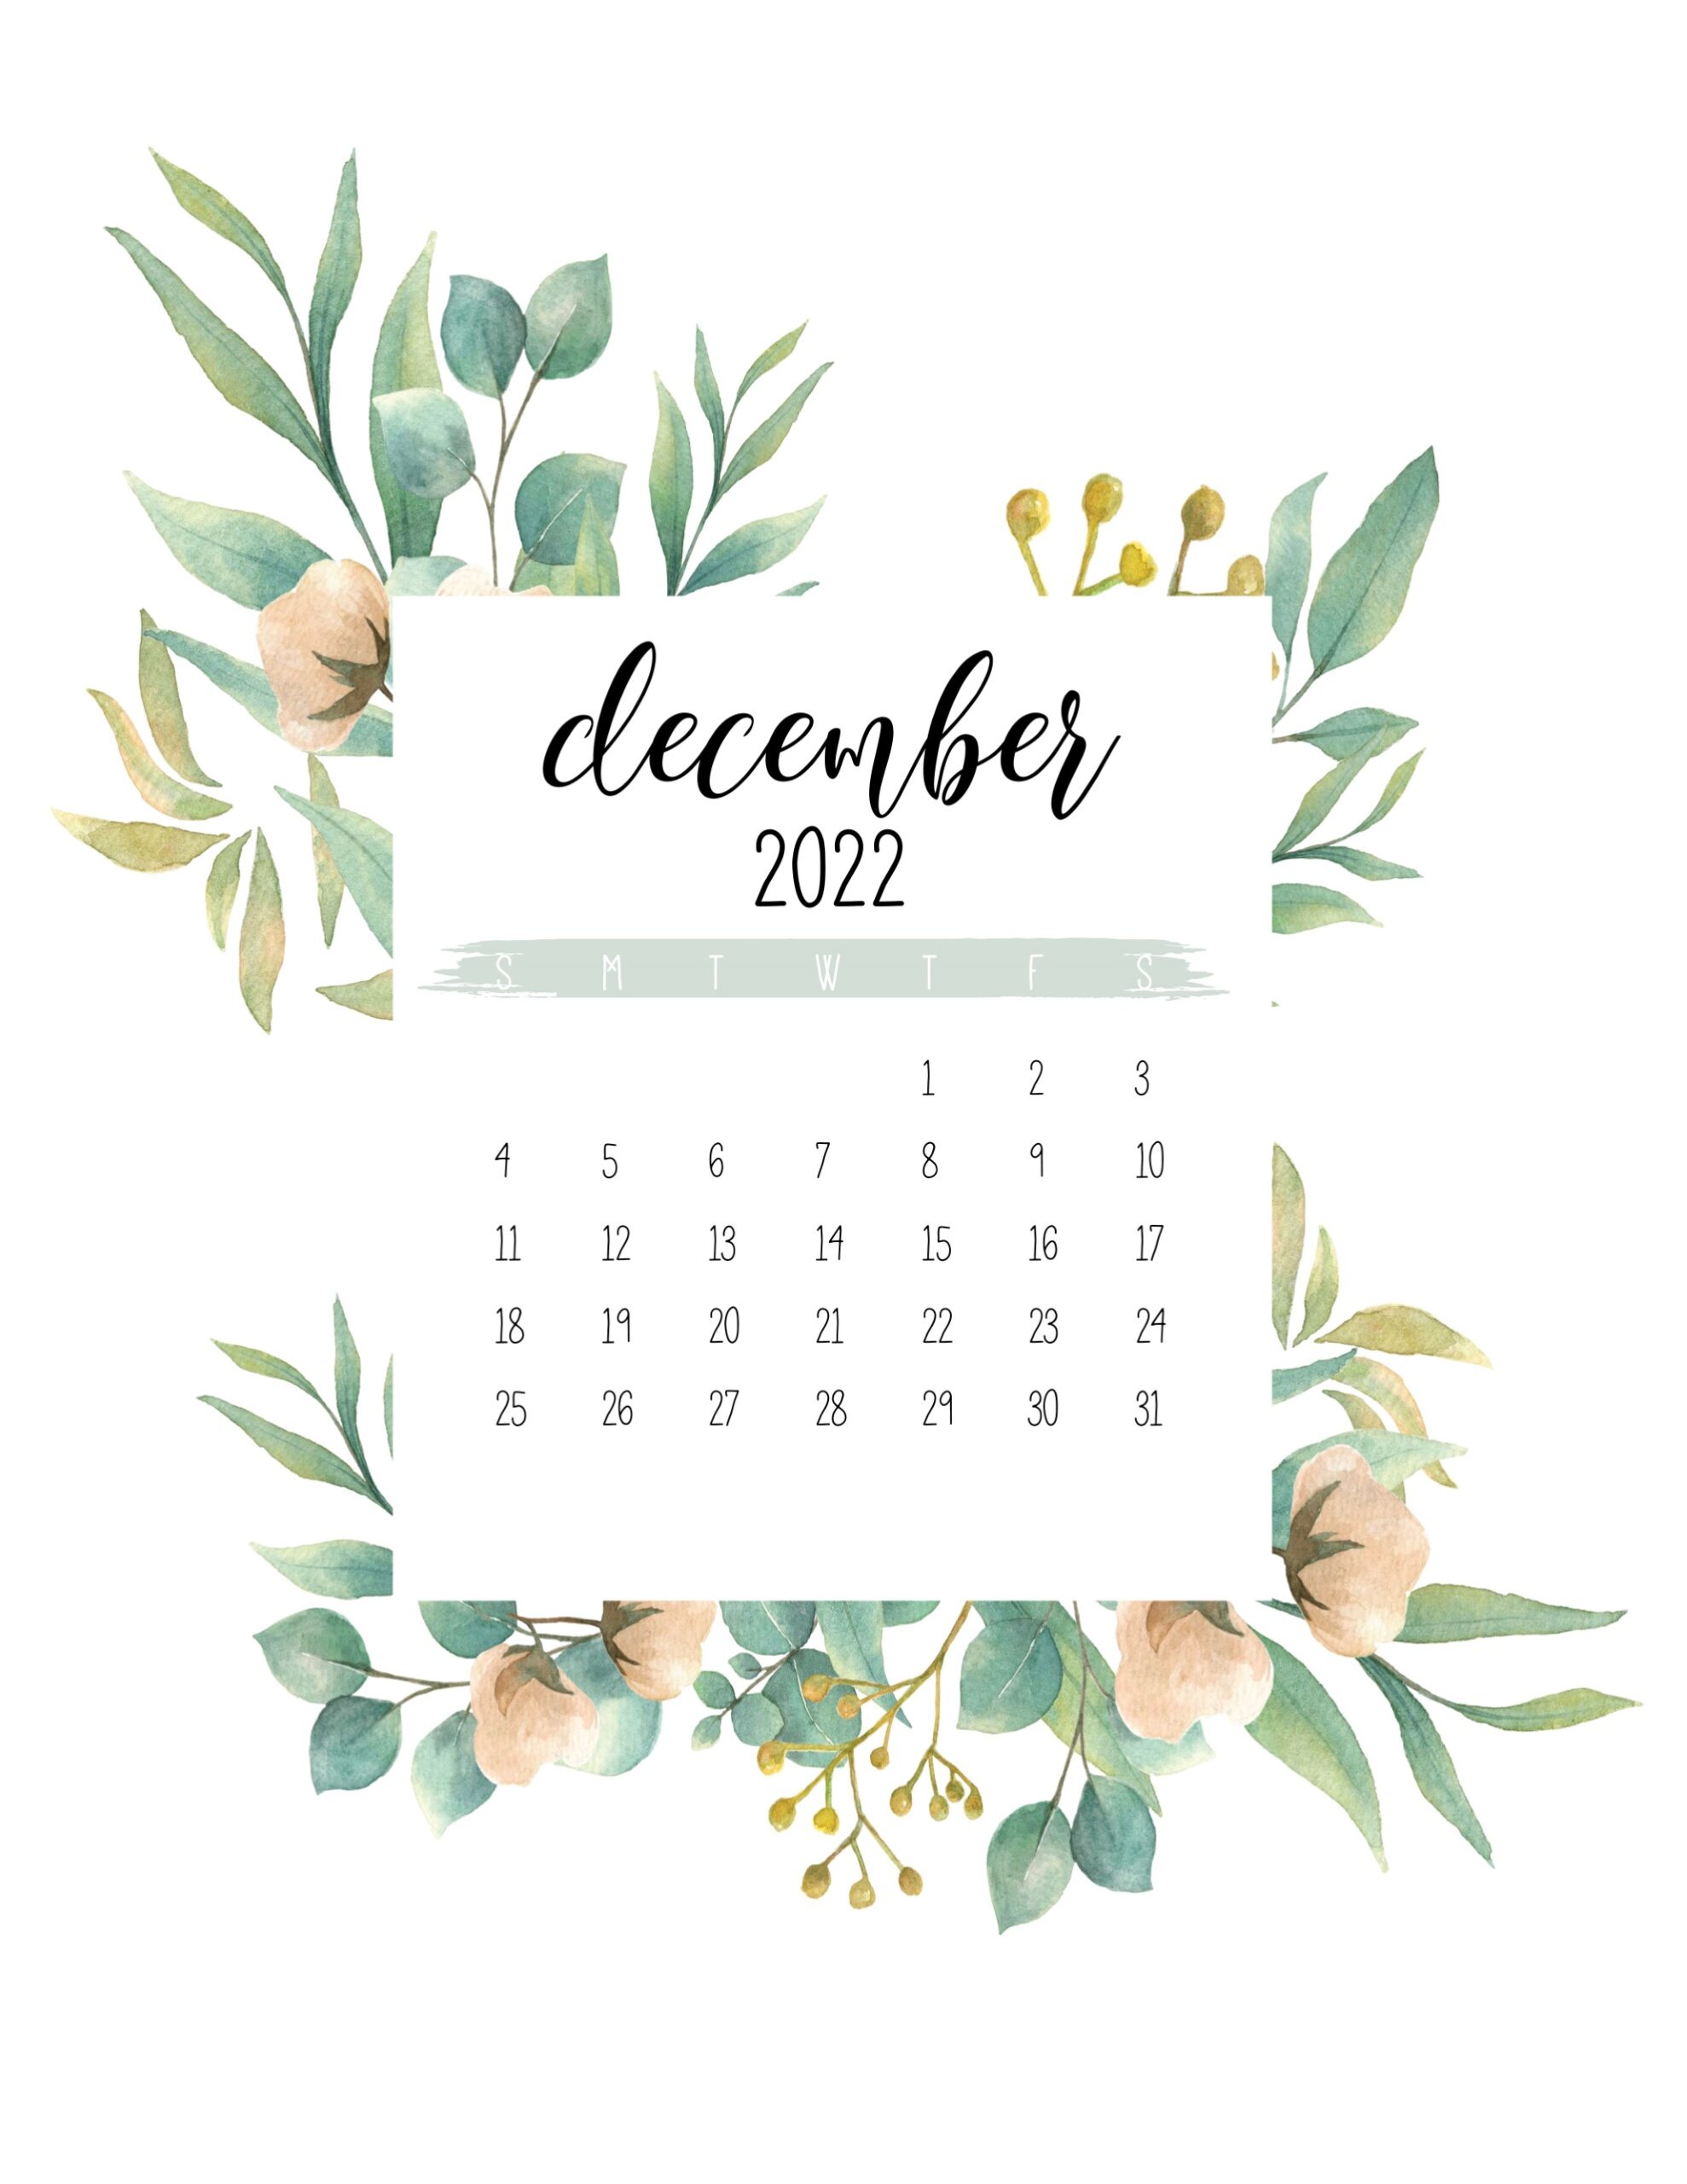 December 2022 Calendar Wallpaper  TubeWP